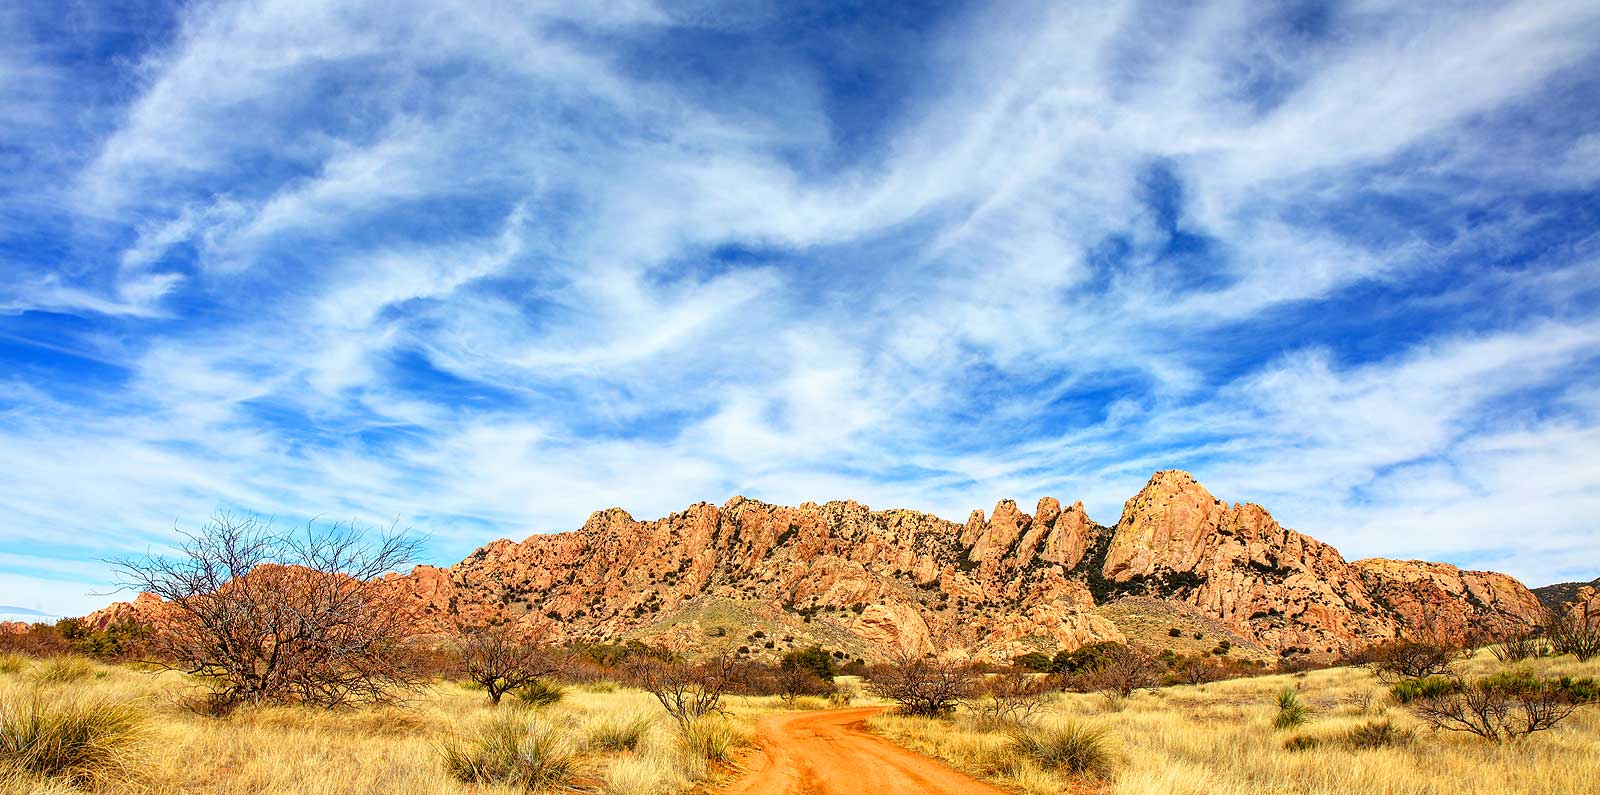 Desert in Arizona